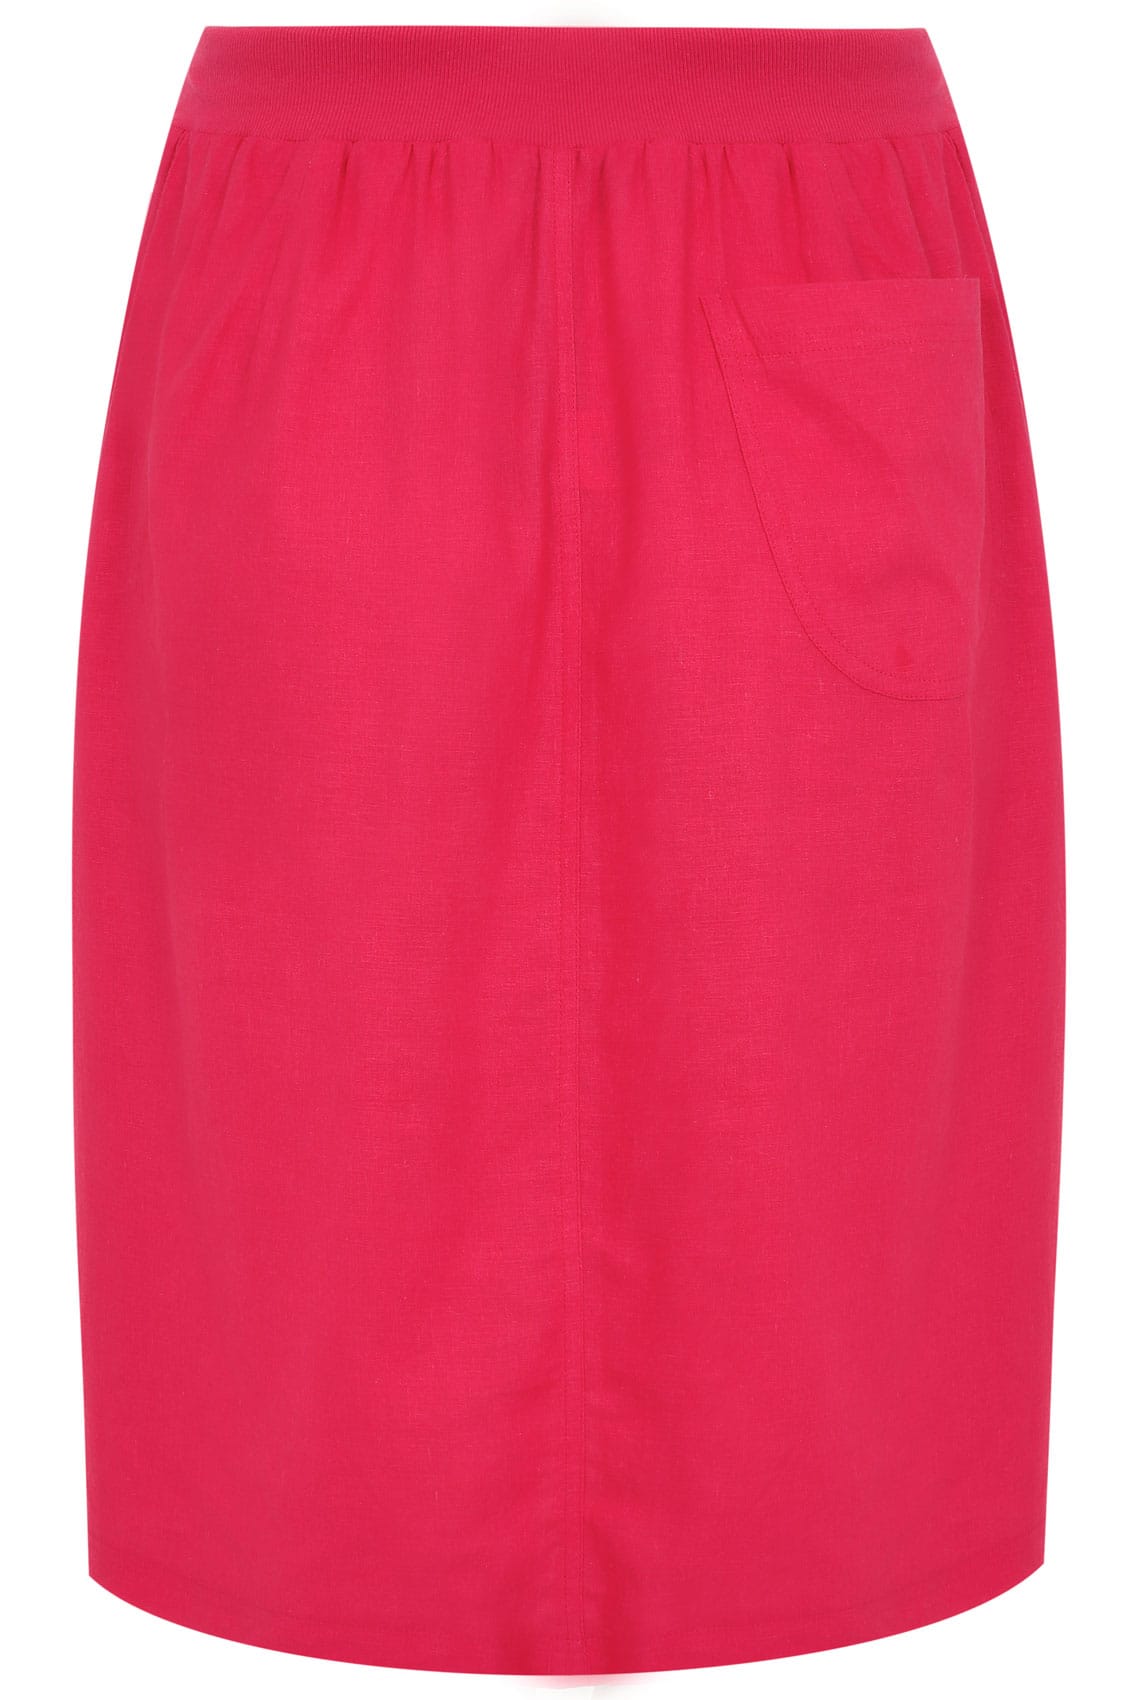 Magenta Pink Linen Midi Skirt, Plus size 16 to 36